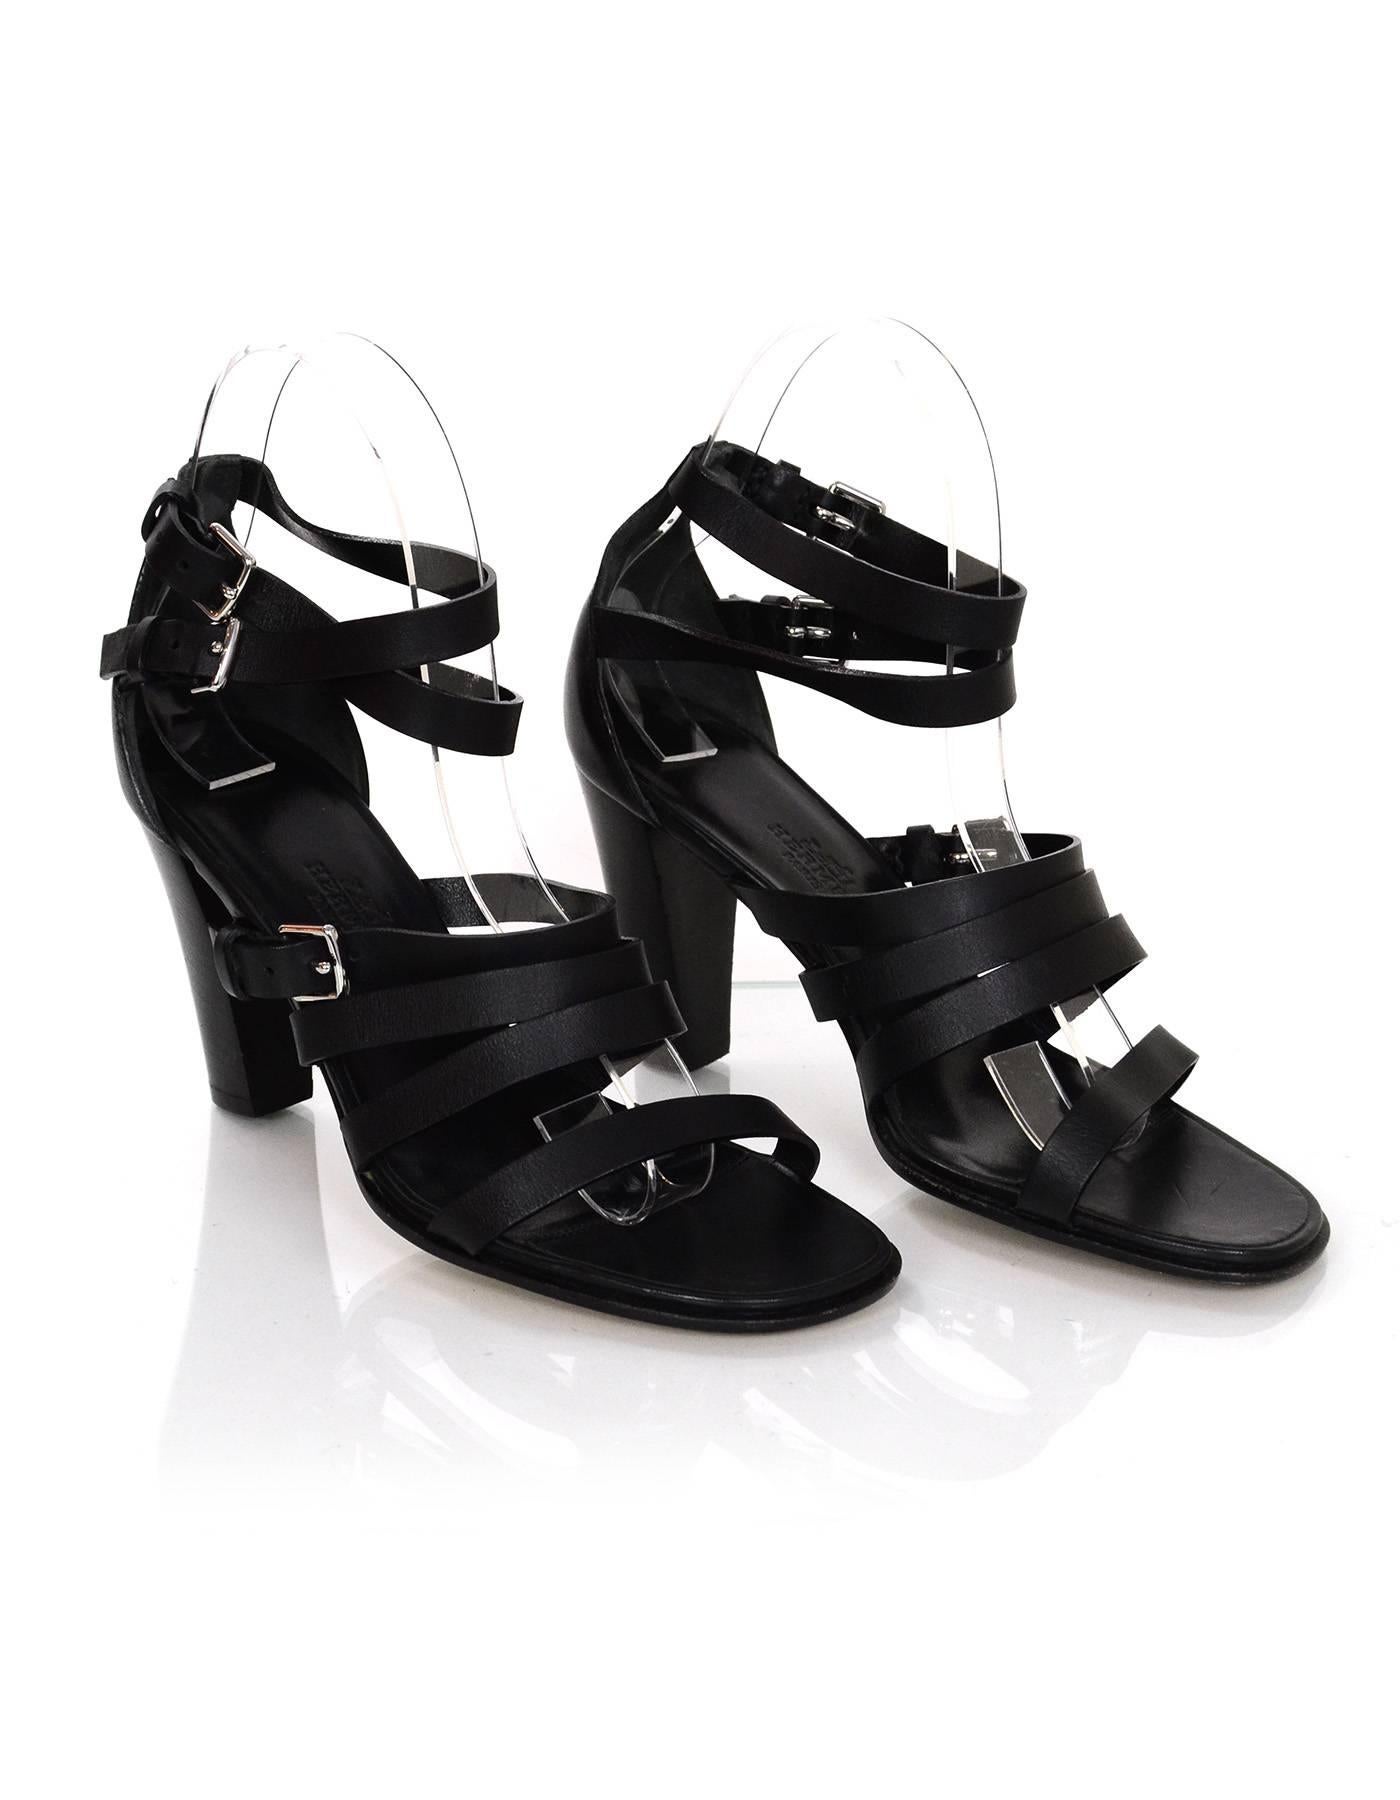 Women's Hermes Black Leather Strappy Sandals sz 36